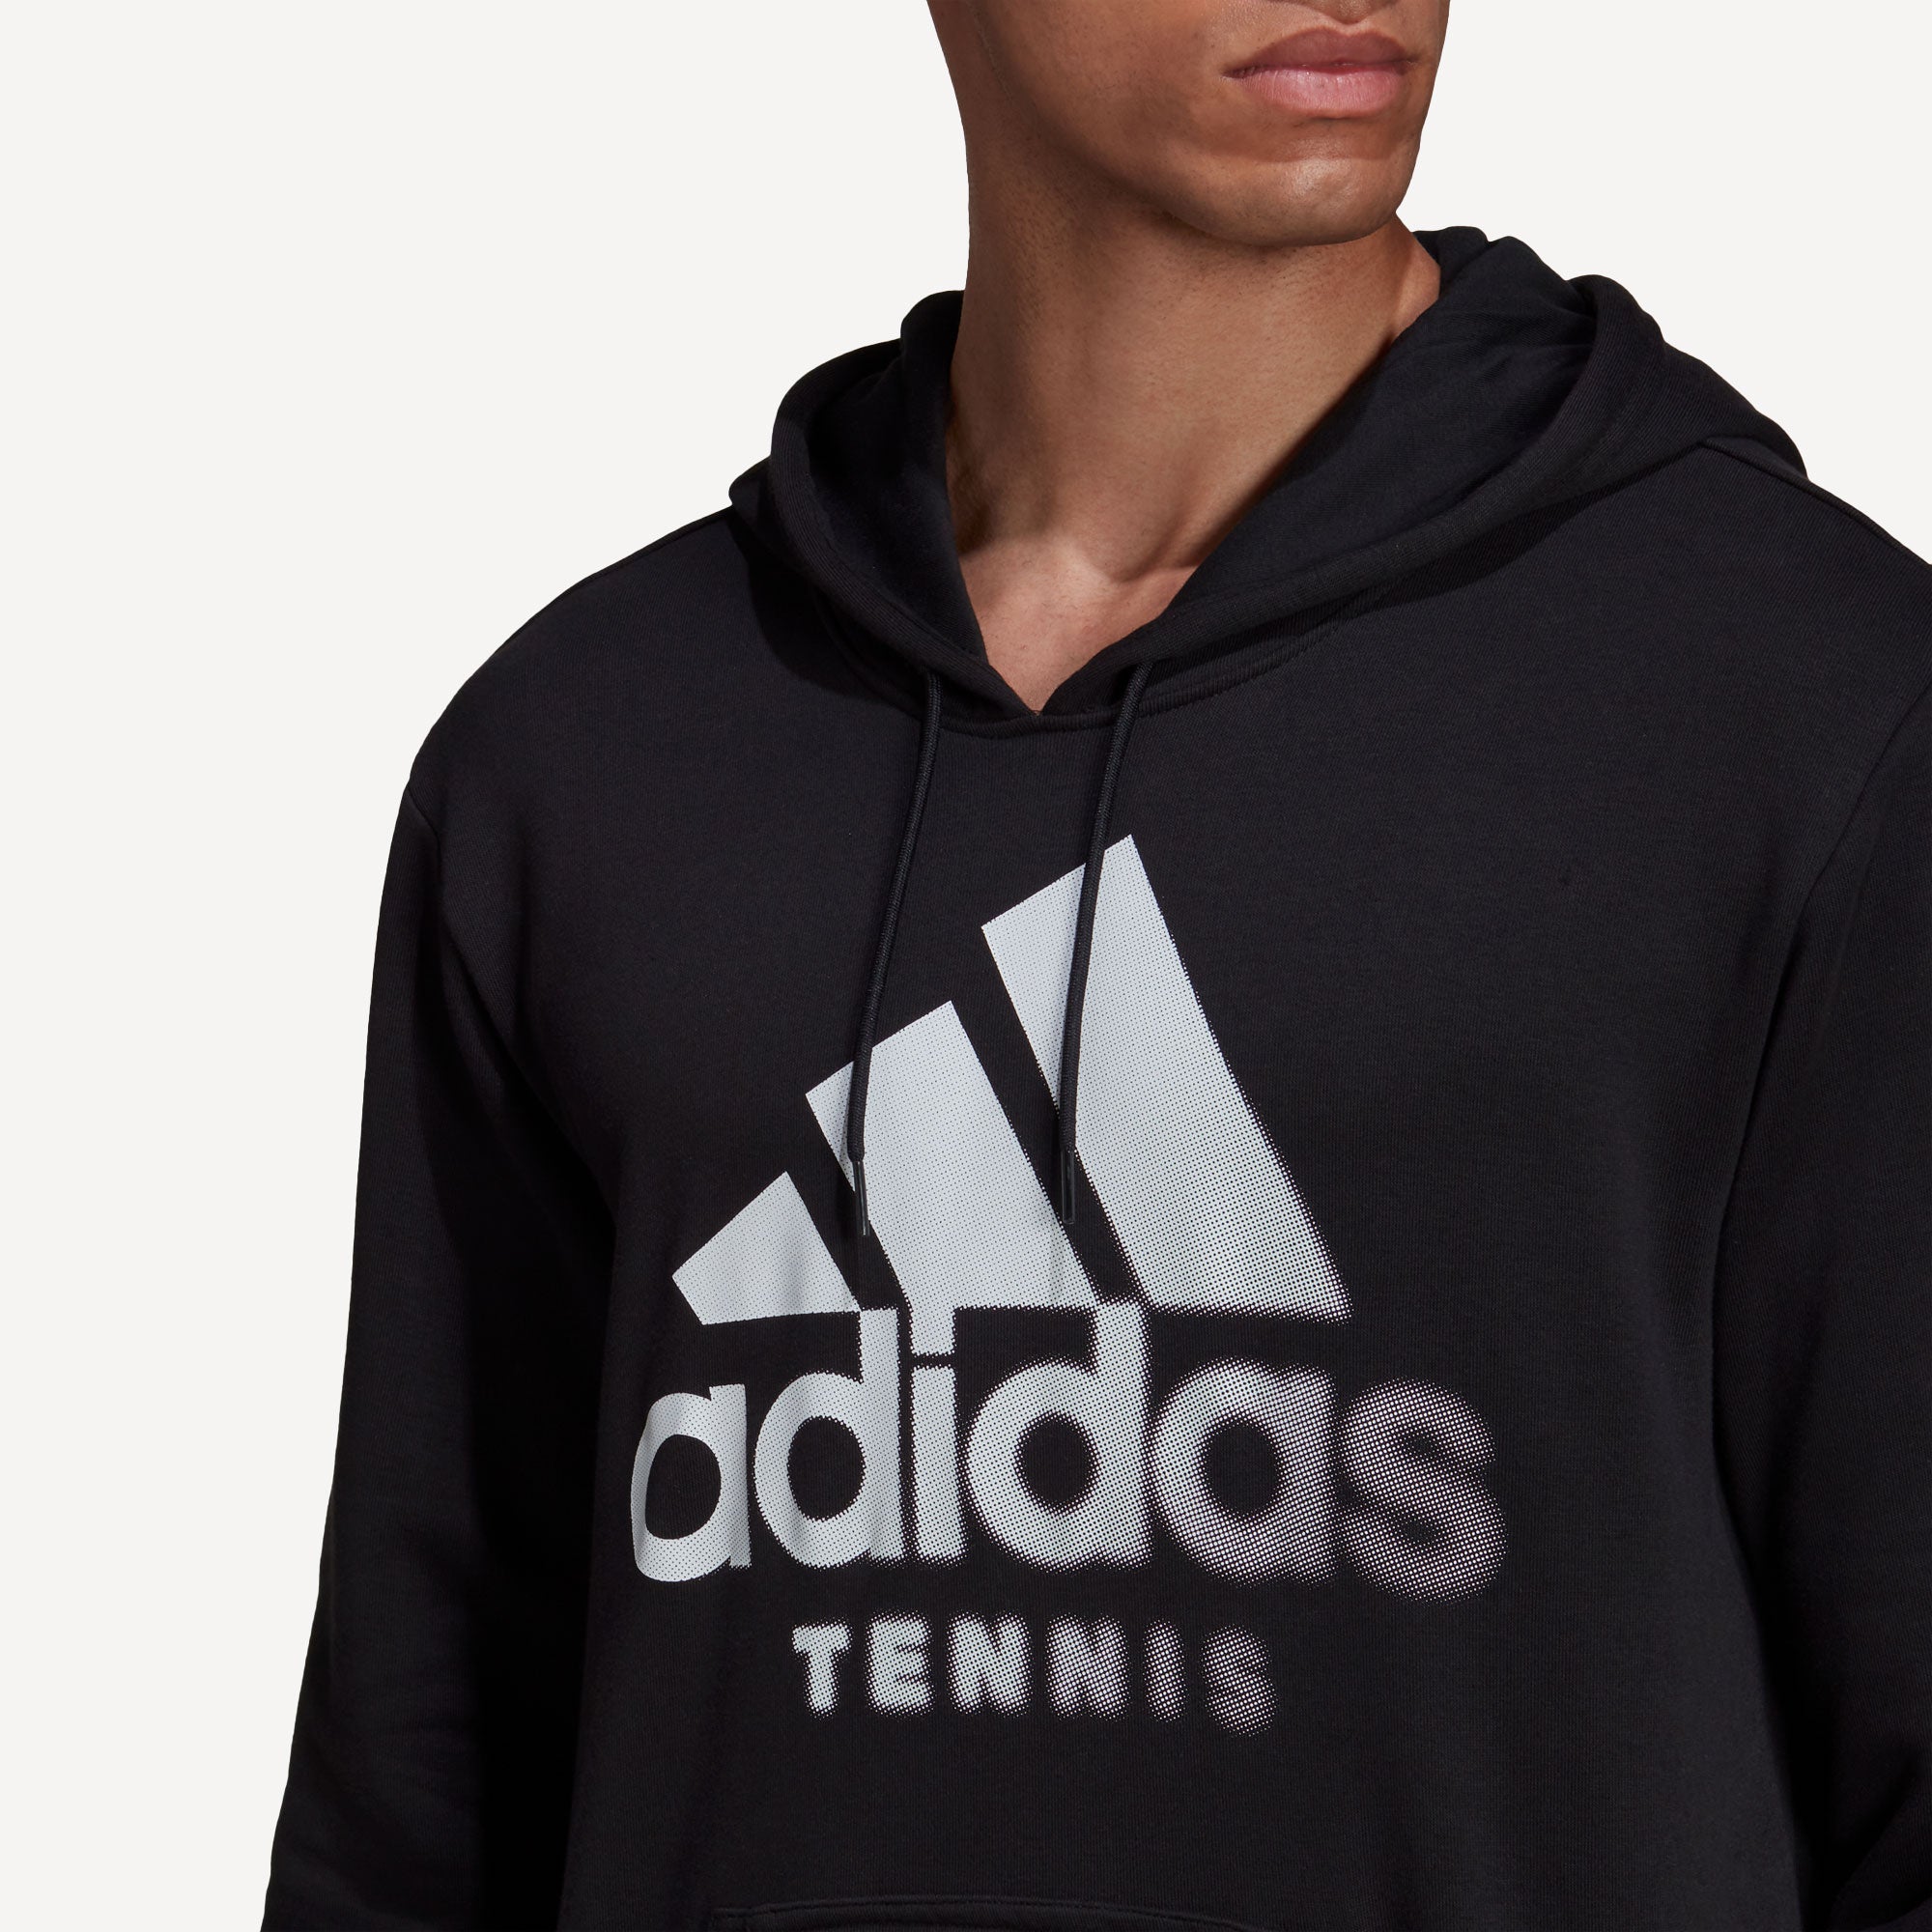 adidas Men's Graphic Tennis Hoodie Black (4)